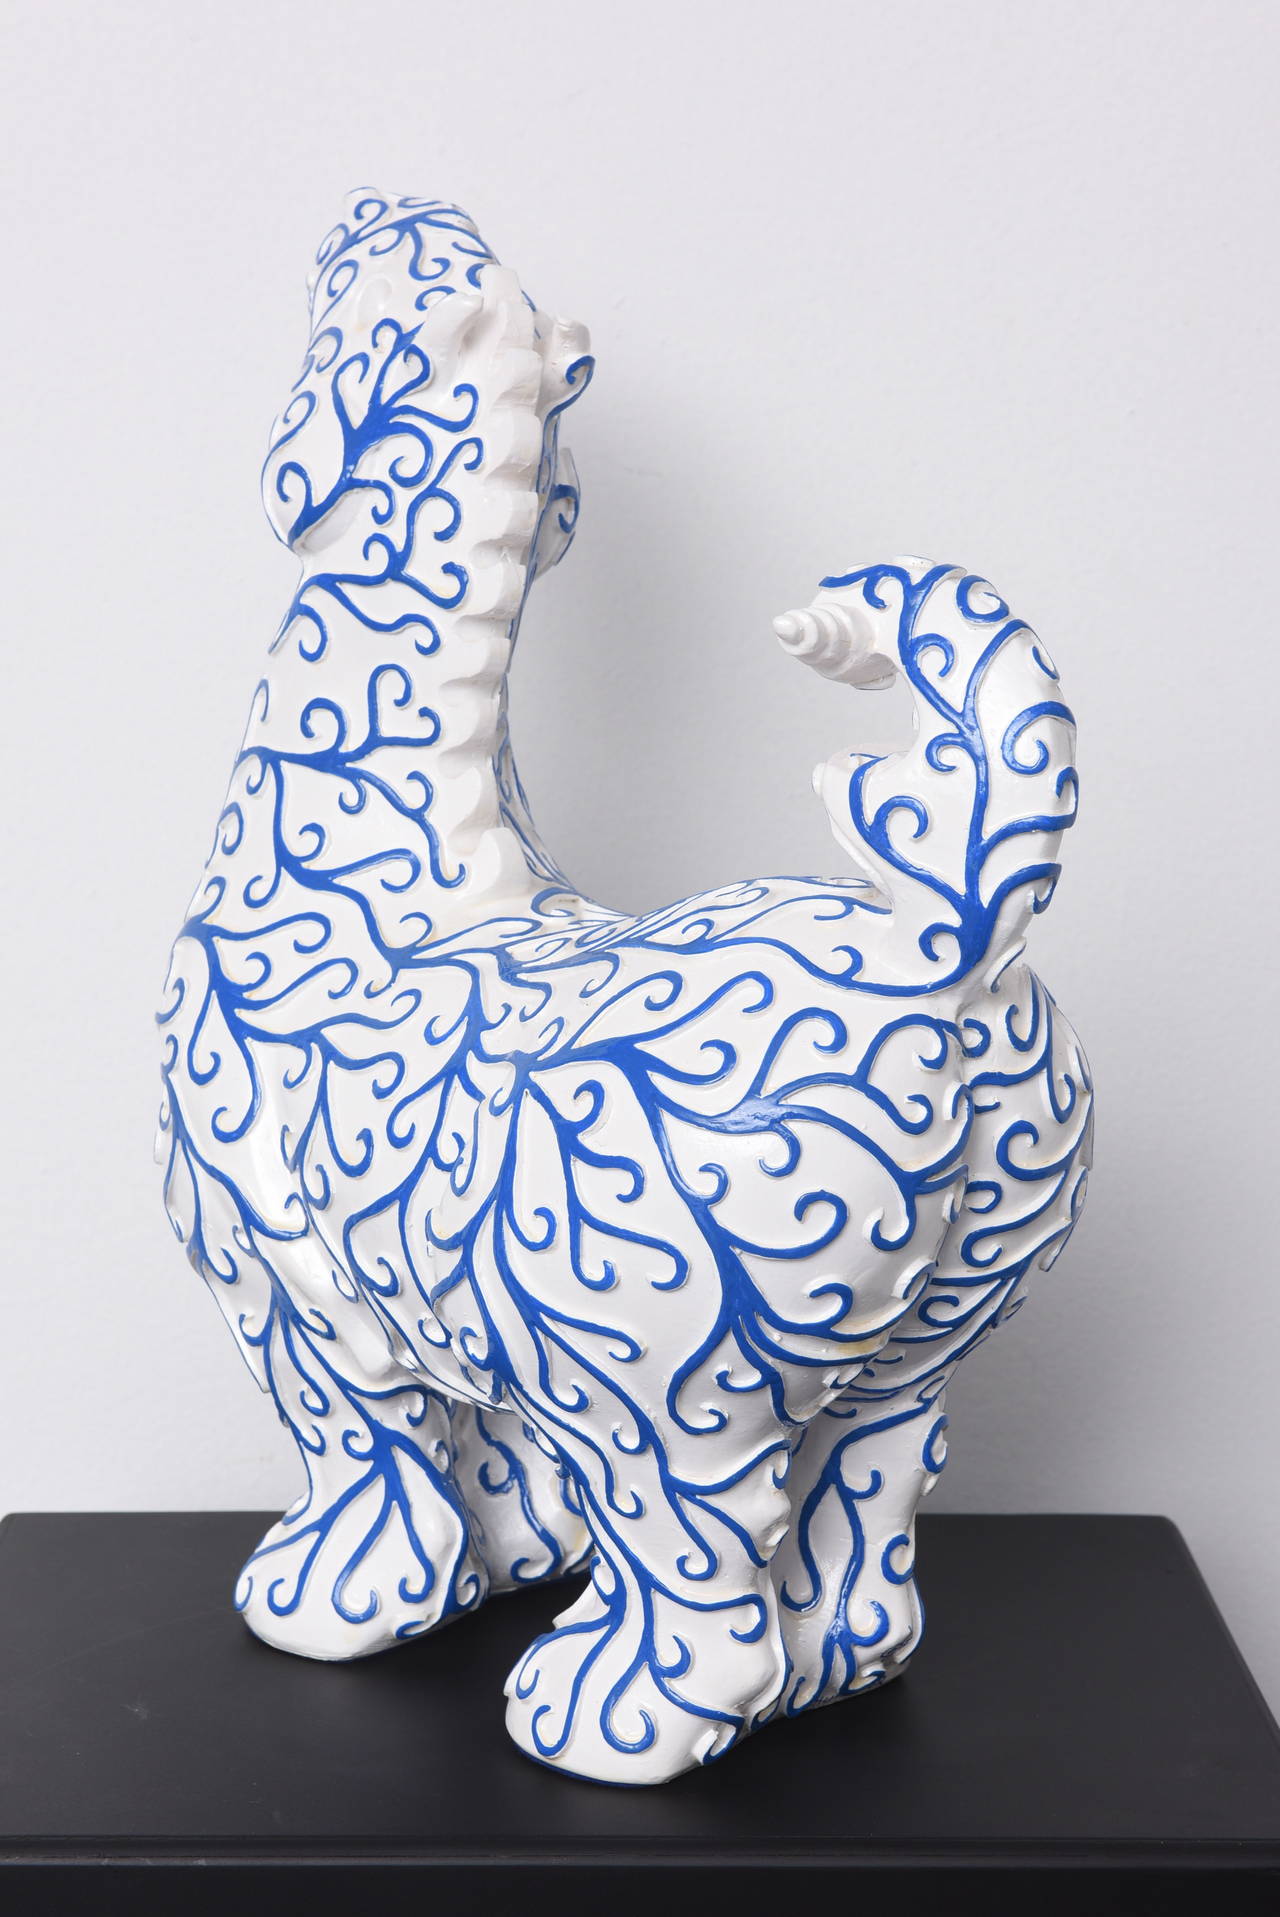 Arabesques Horse - Blue & White Resin sculpture For Sale 3